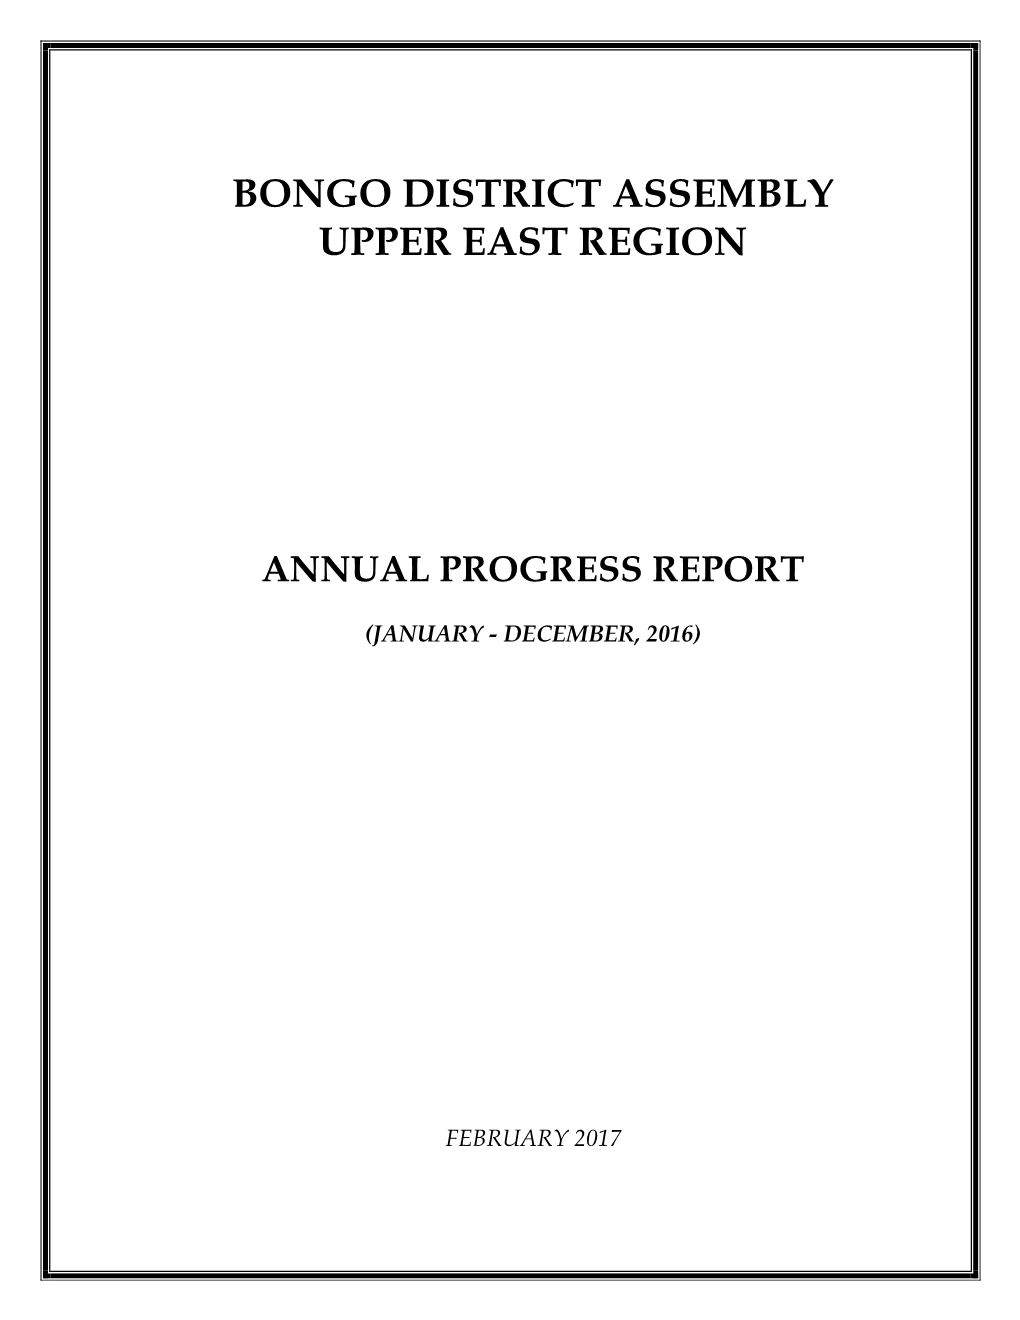 Bongo District Assembly Upper East Region